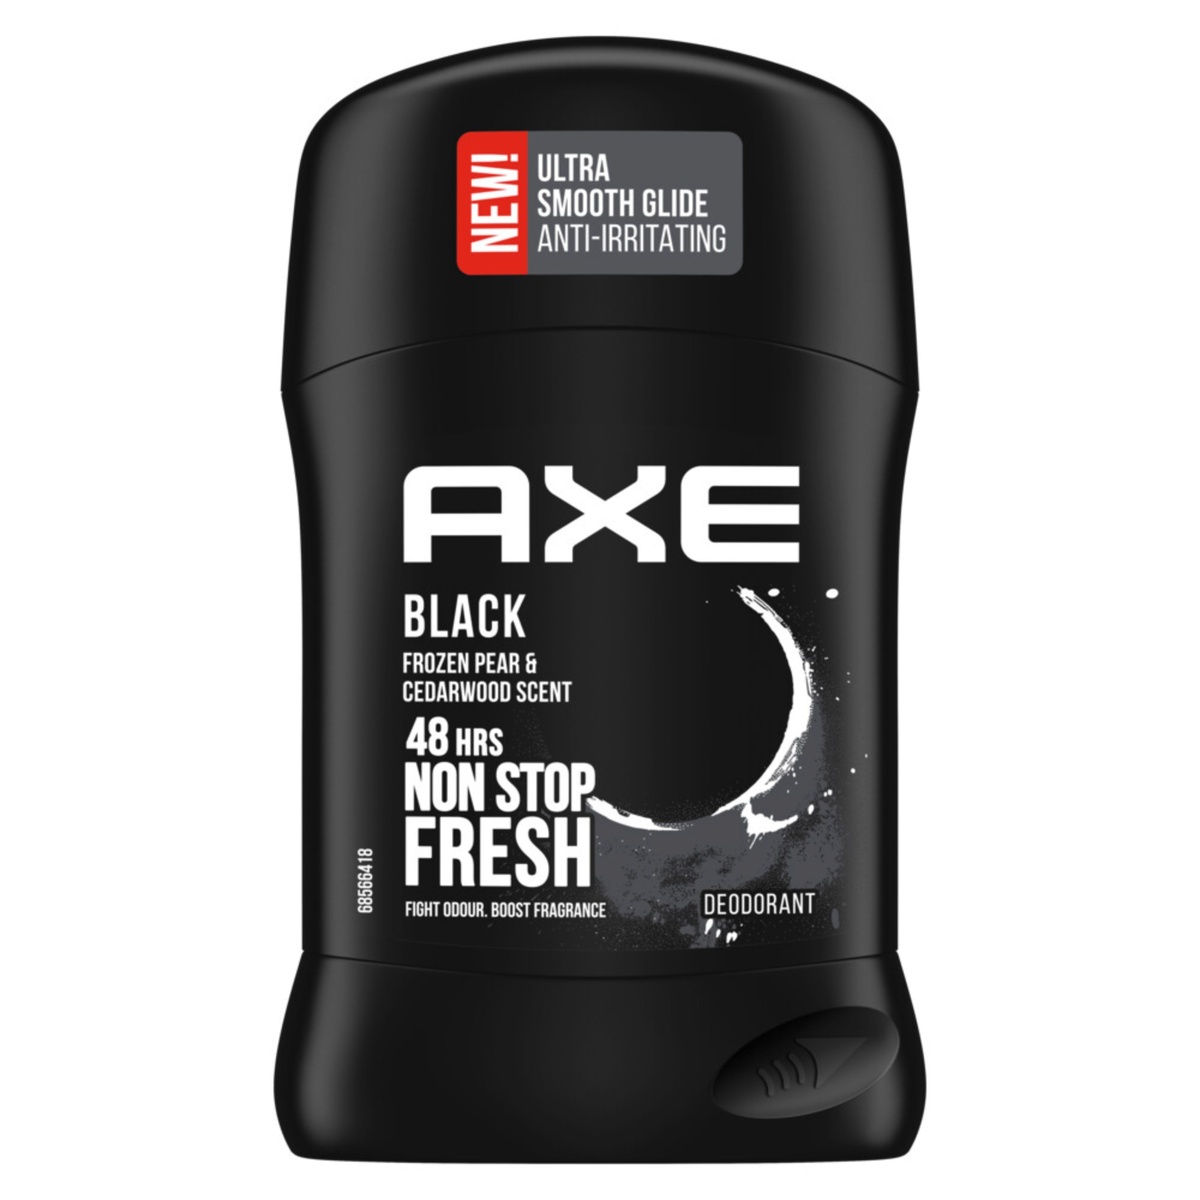 Axe Black Deodorant Stick 50 ml